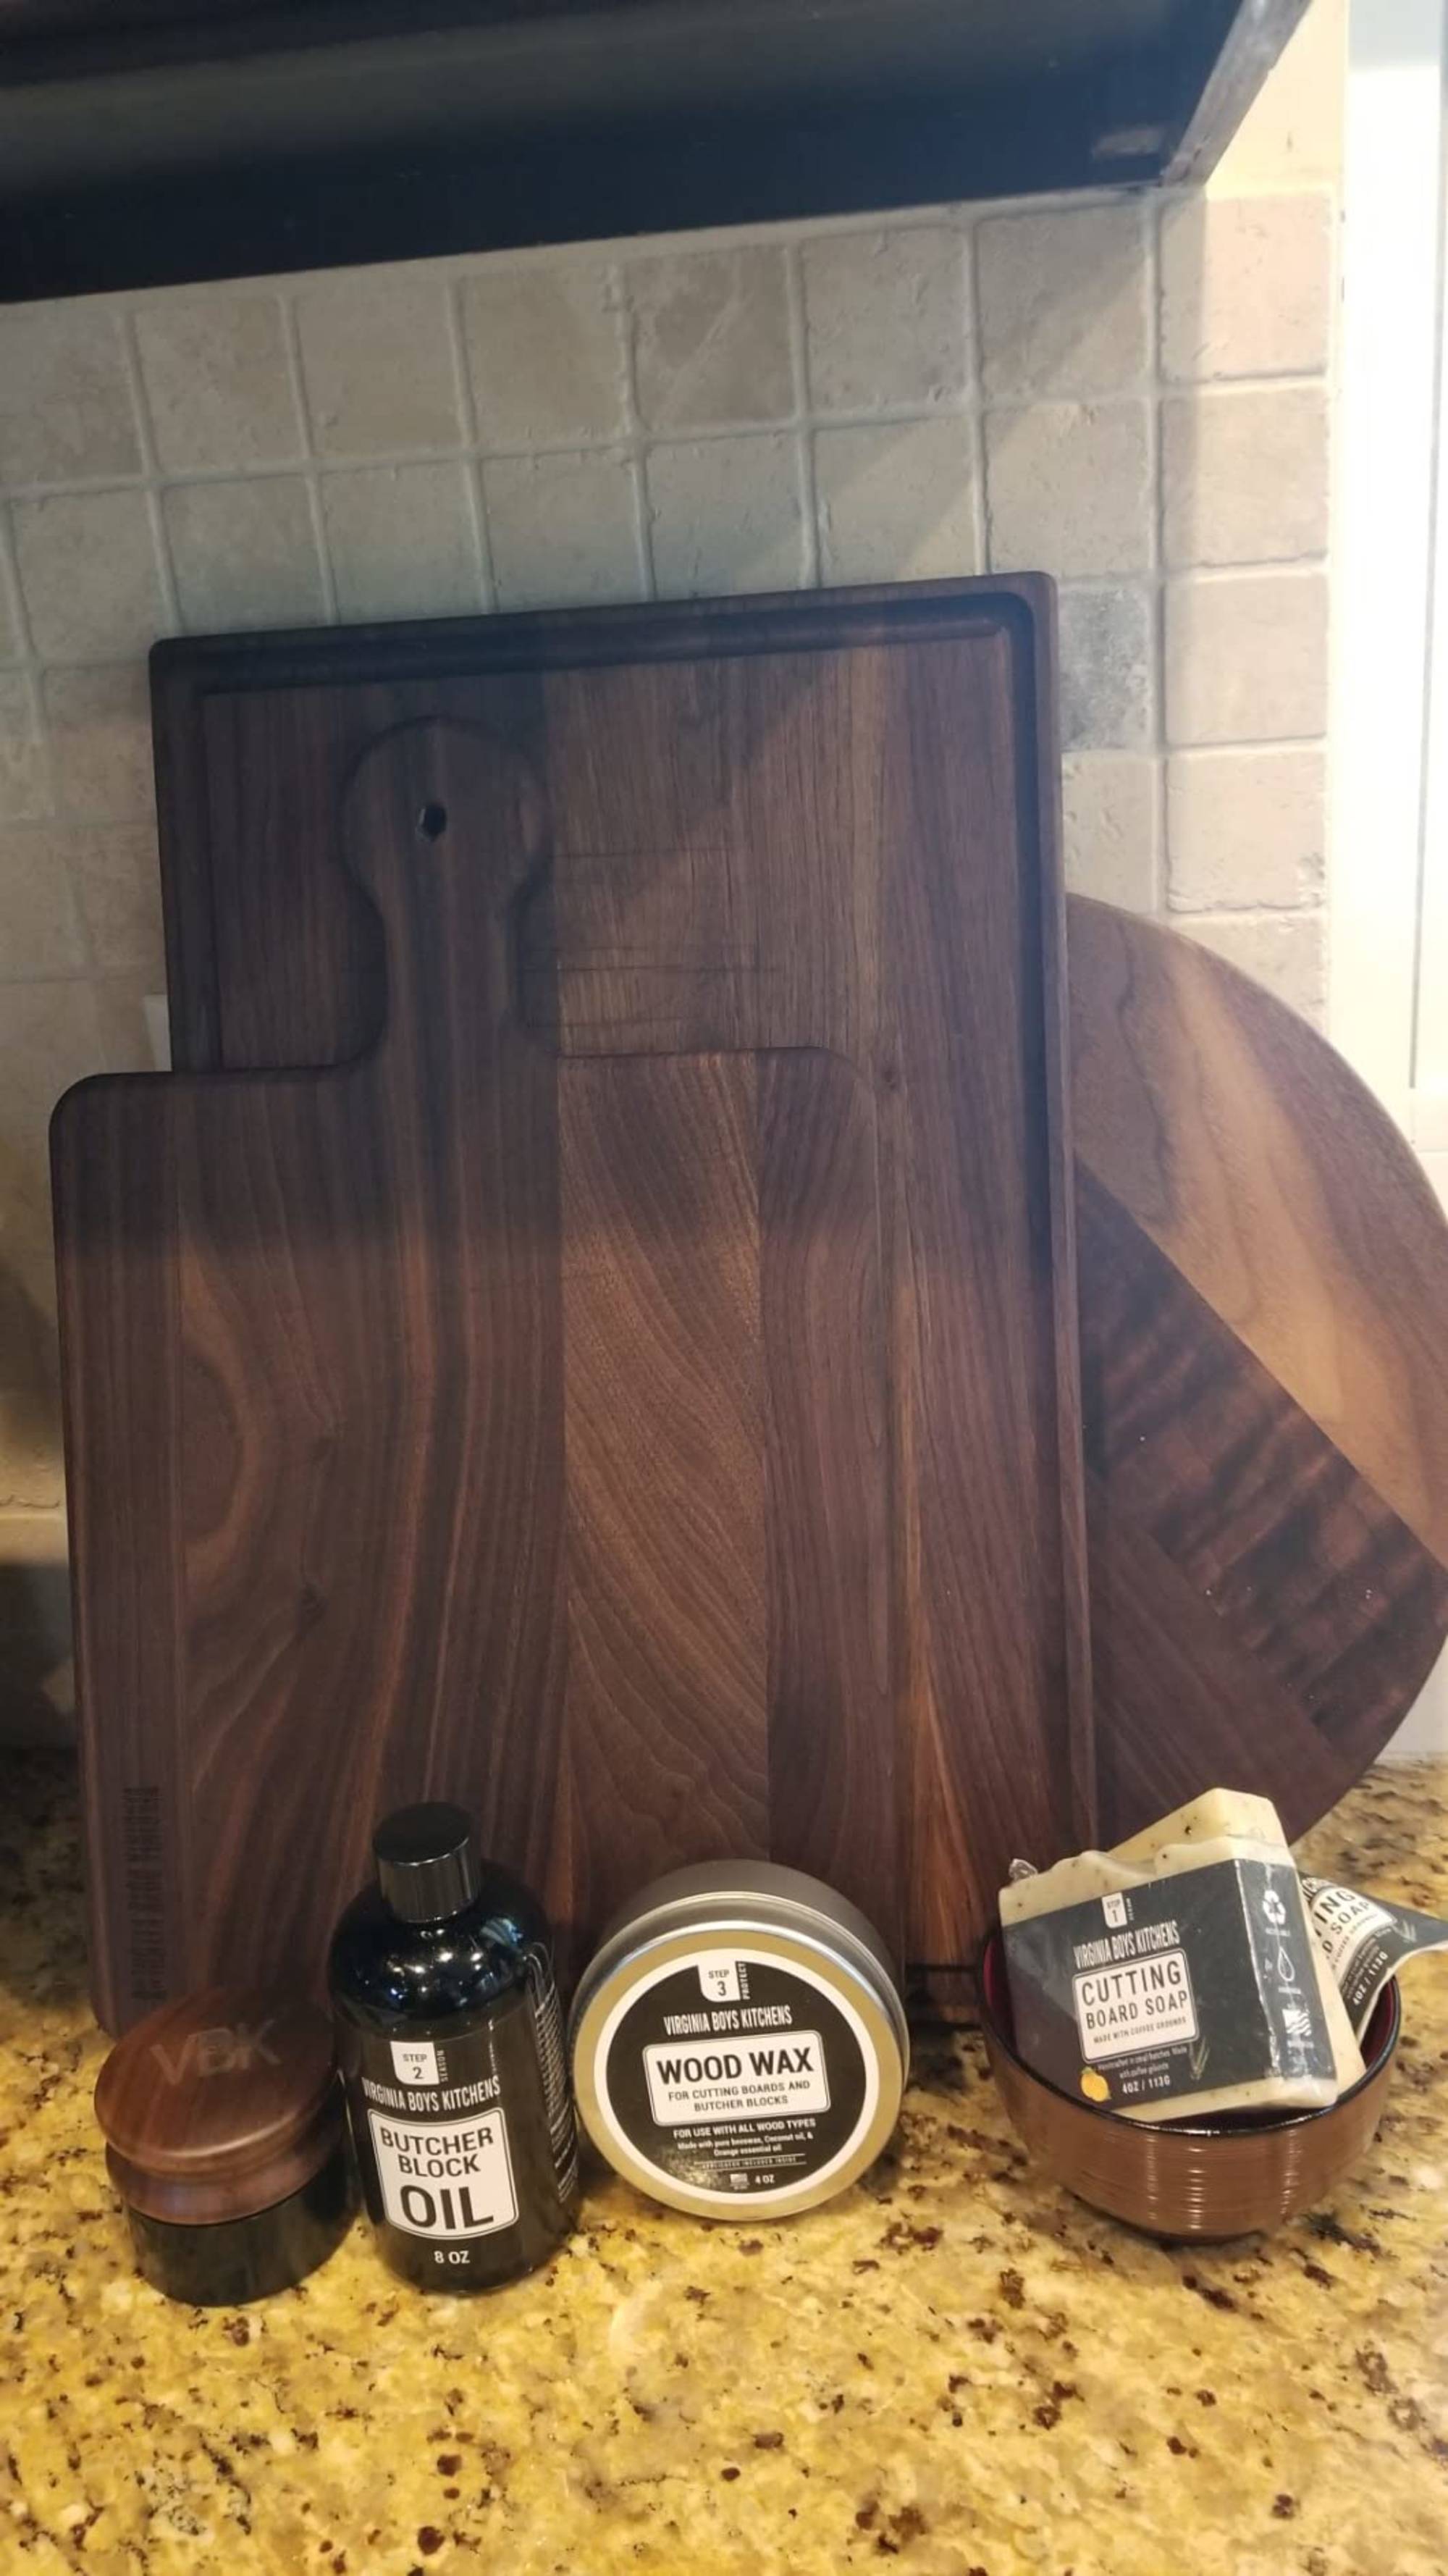 Extra Large Walnut Wood Cutting Board by Virginia Boys Kitchens